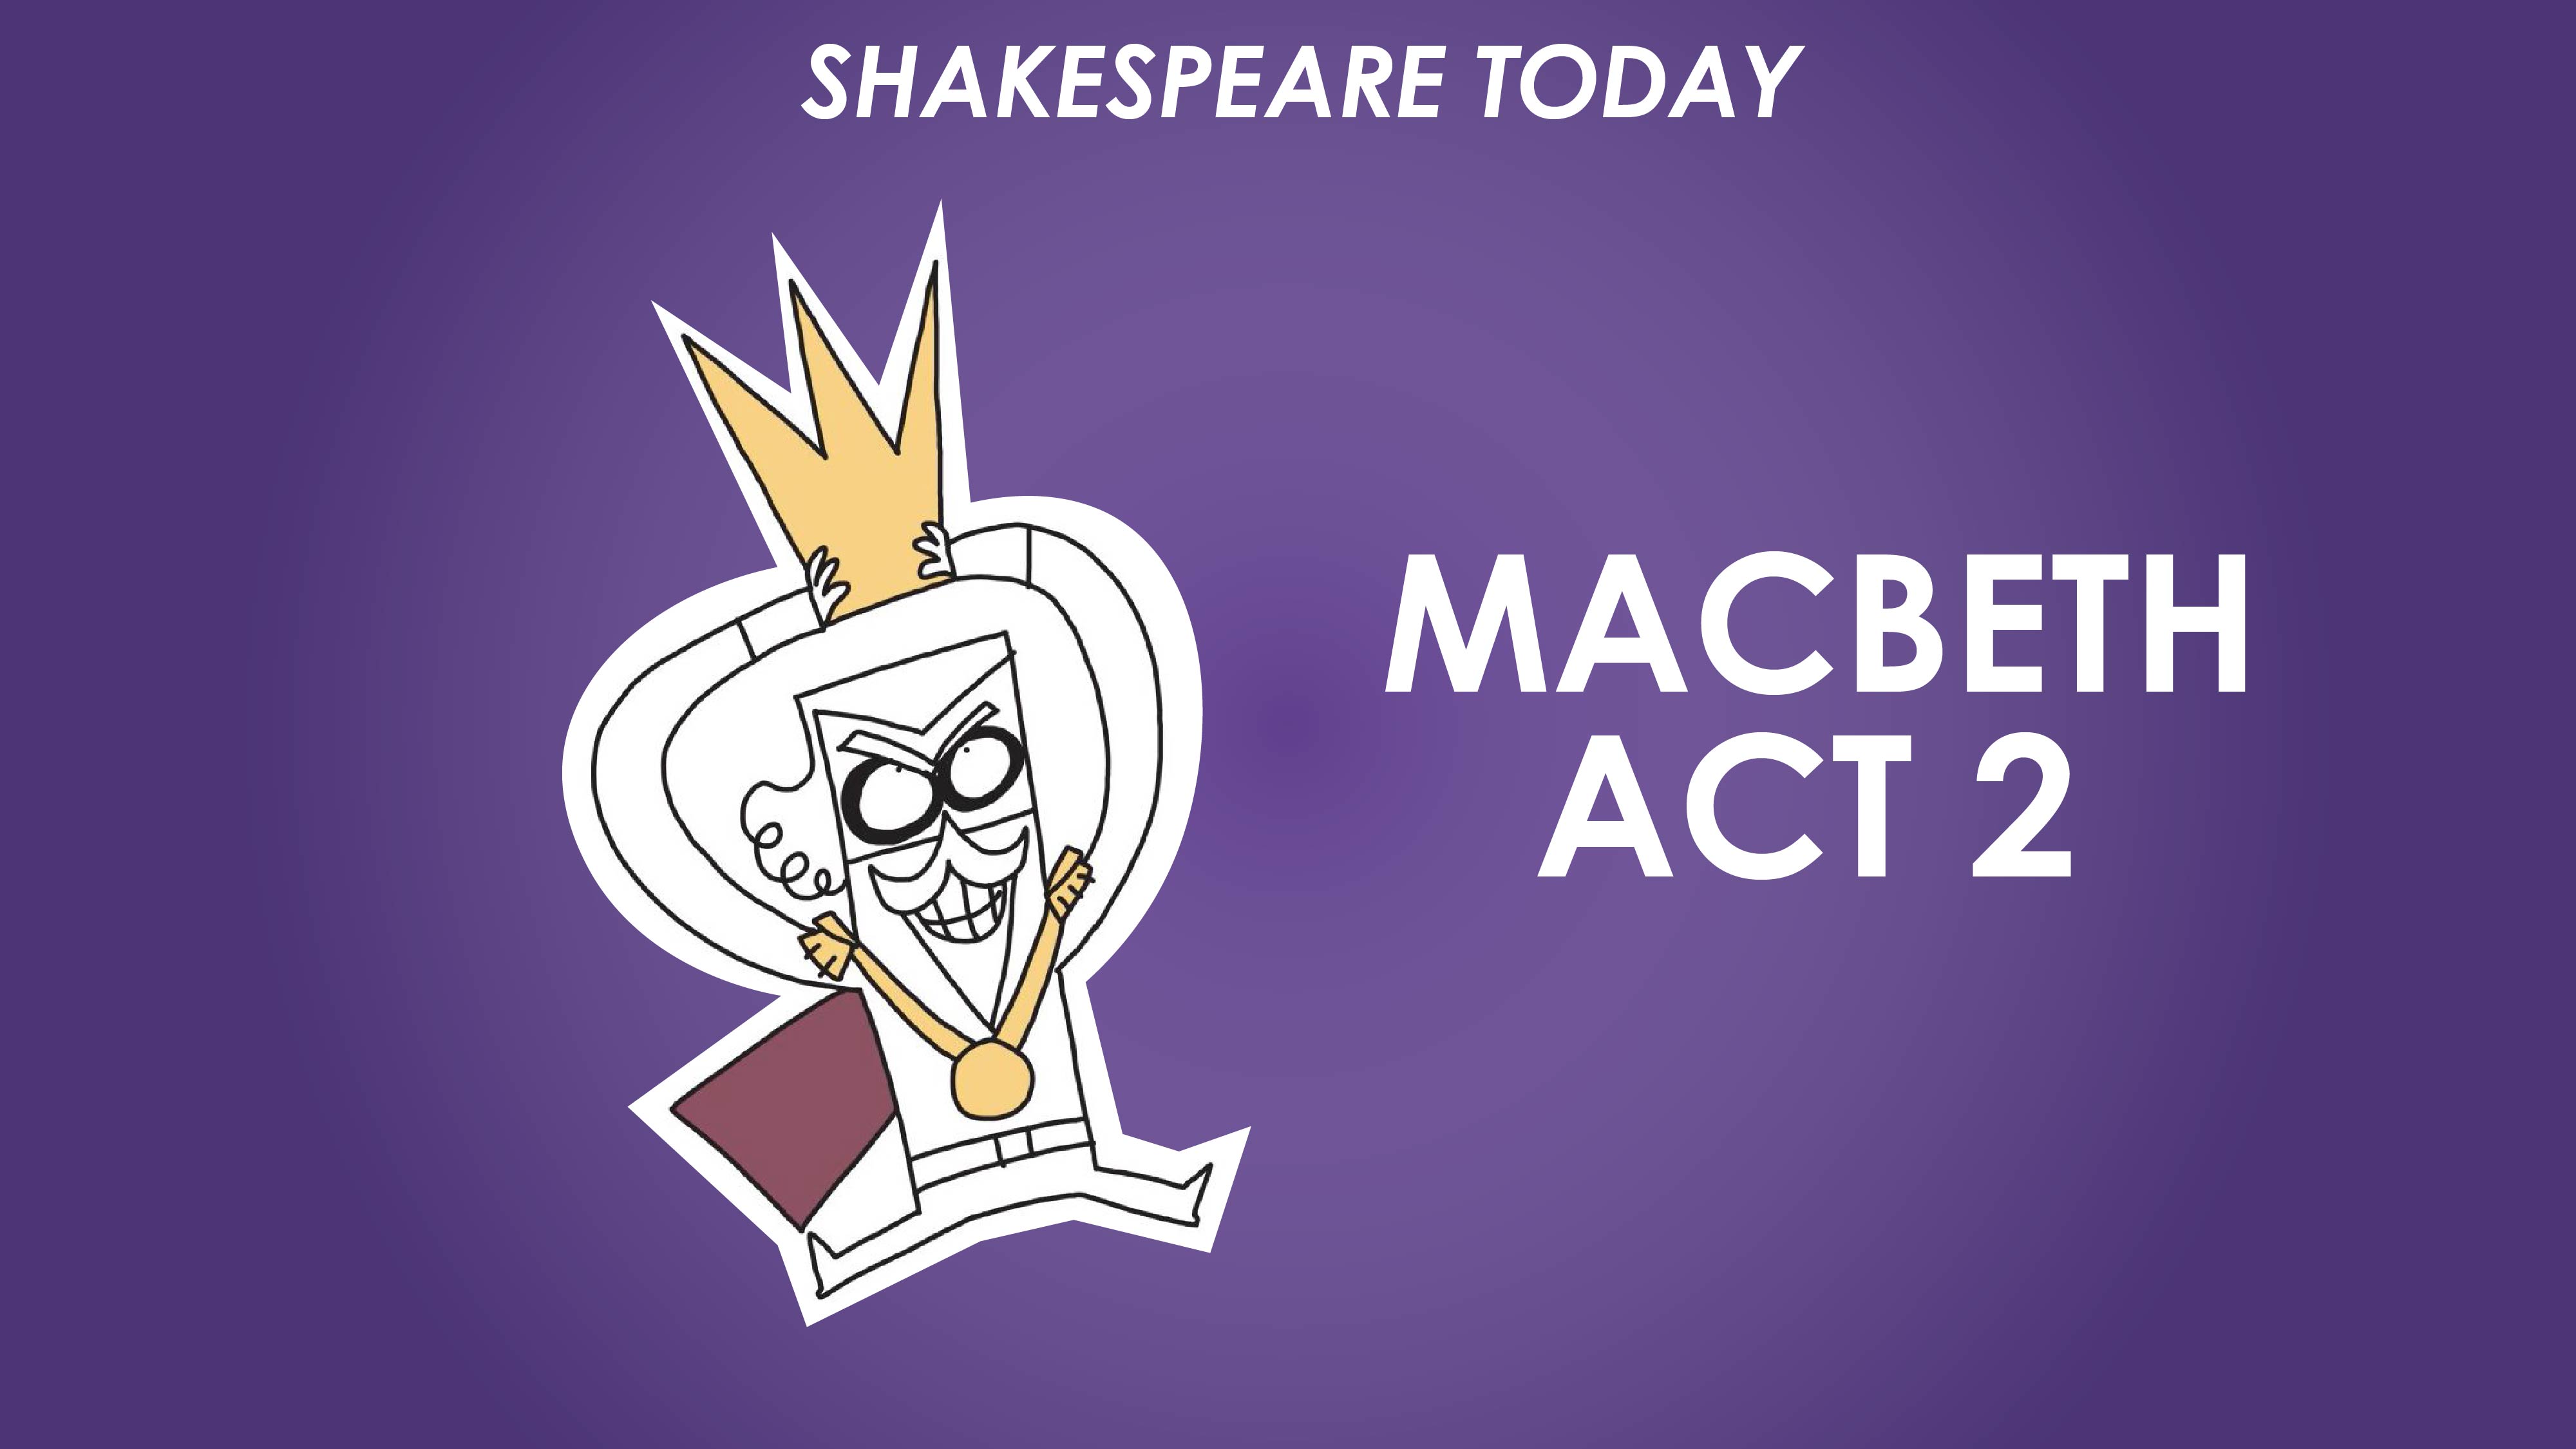 Macbeth Act 2 Summary - Shakespeare Today Series